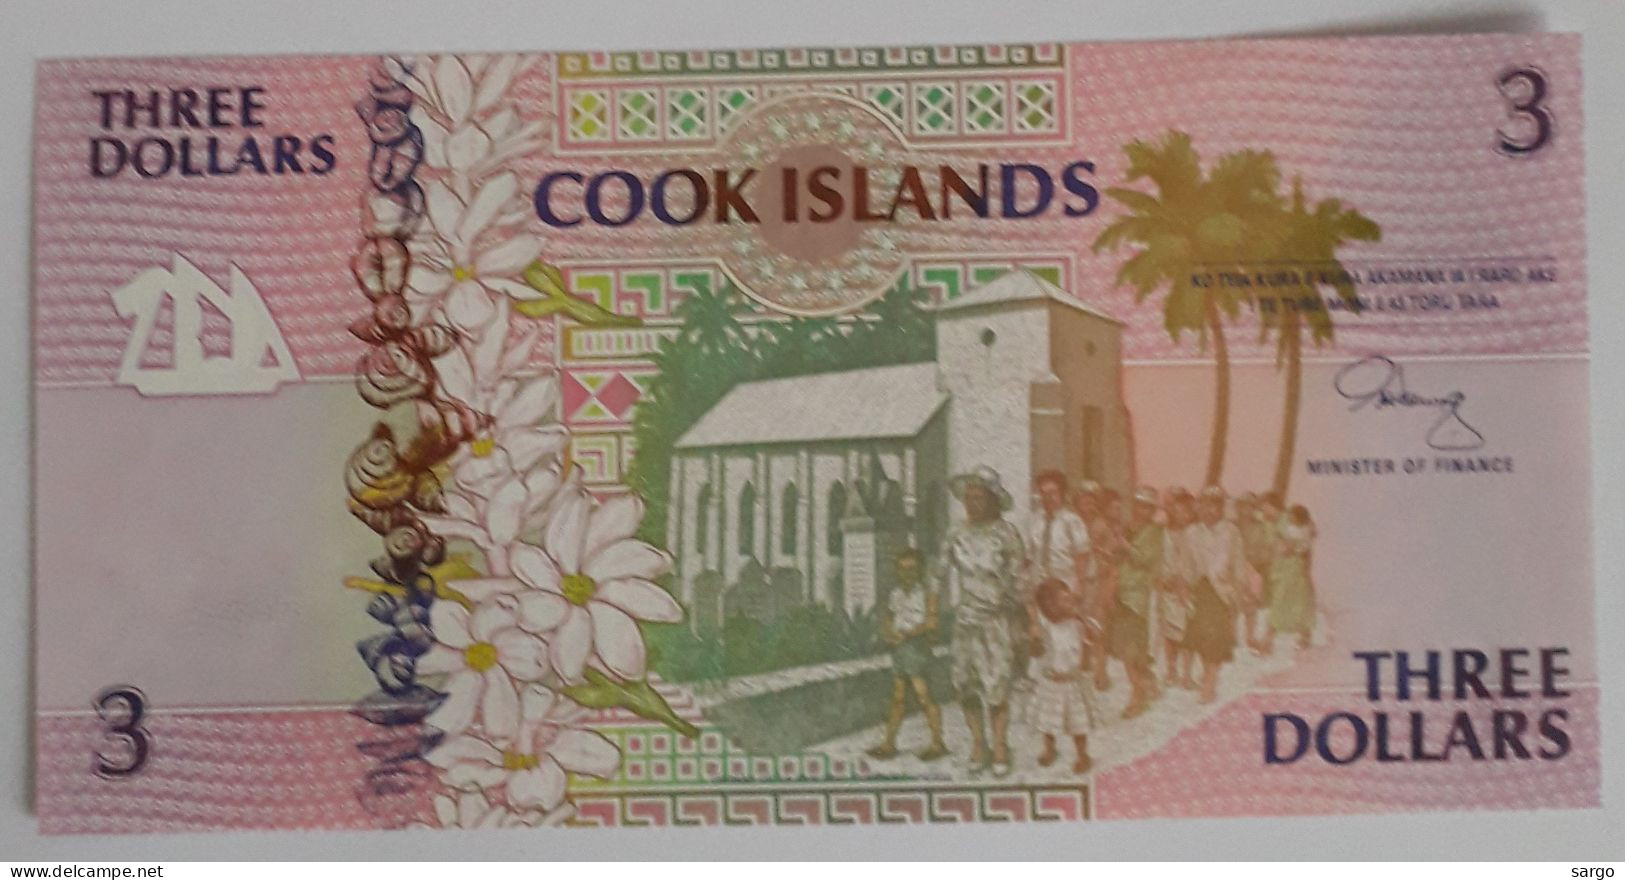 COOK ISLANDS - AITUTAKI - 3 DOLLARS - 1992 - UNC - P 7  - BANKNOTES - PAPER MONEY - CARTAMONETA - - Isole Cook